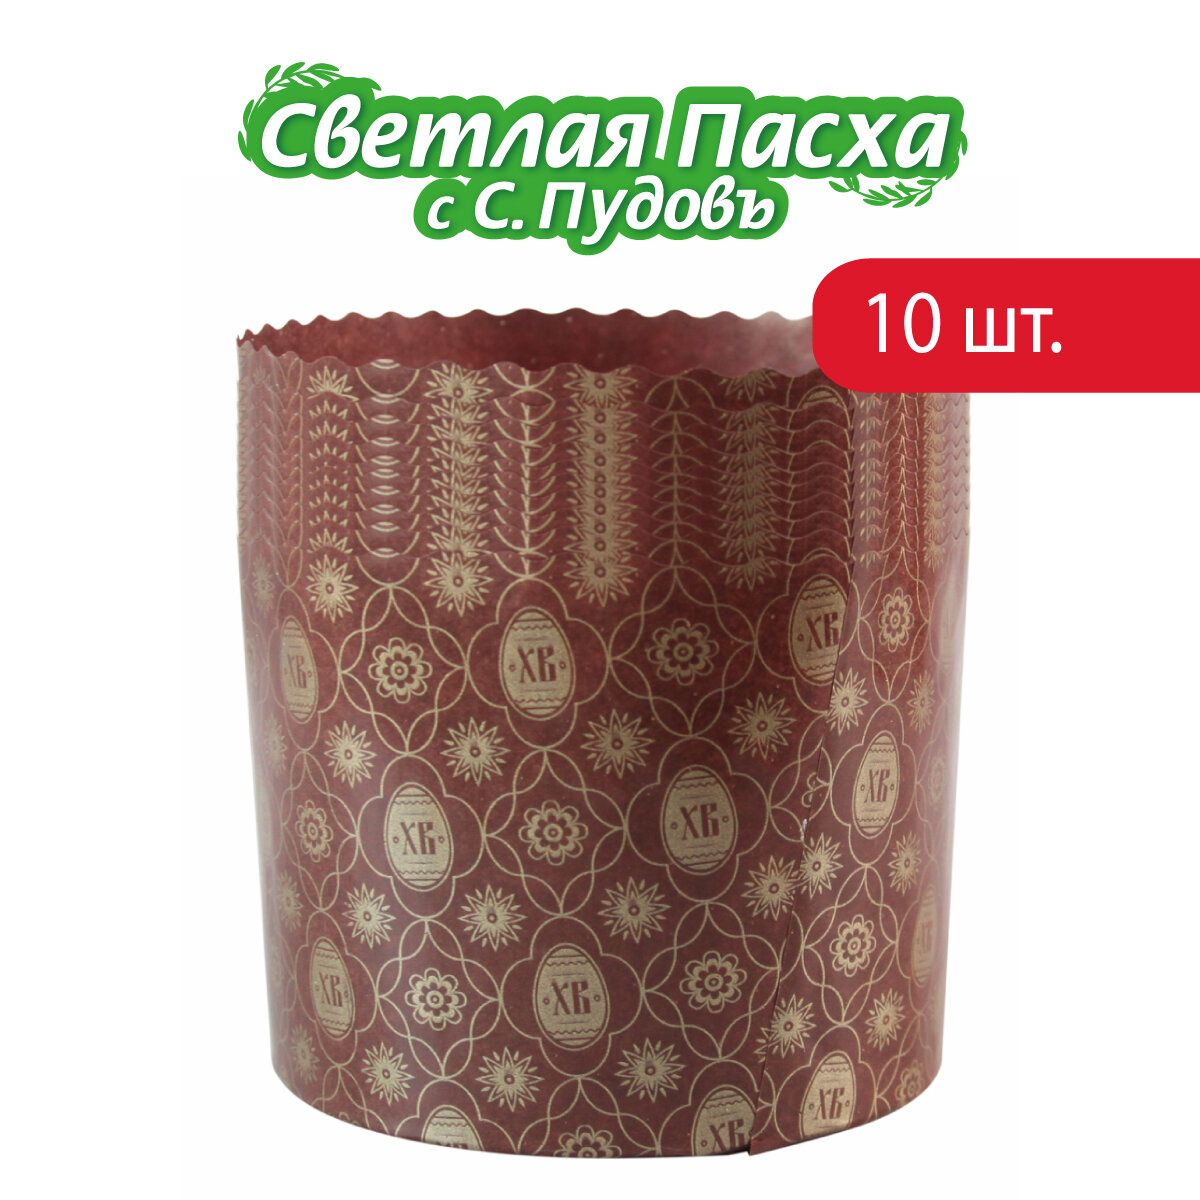 Форма бумажная для выпечки куличей Кулич 250,10 шт, диаметр-110 мм, выстота-85 мм